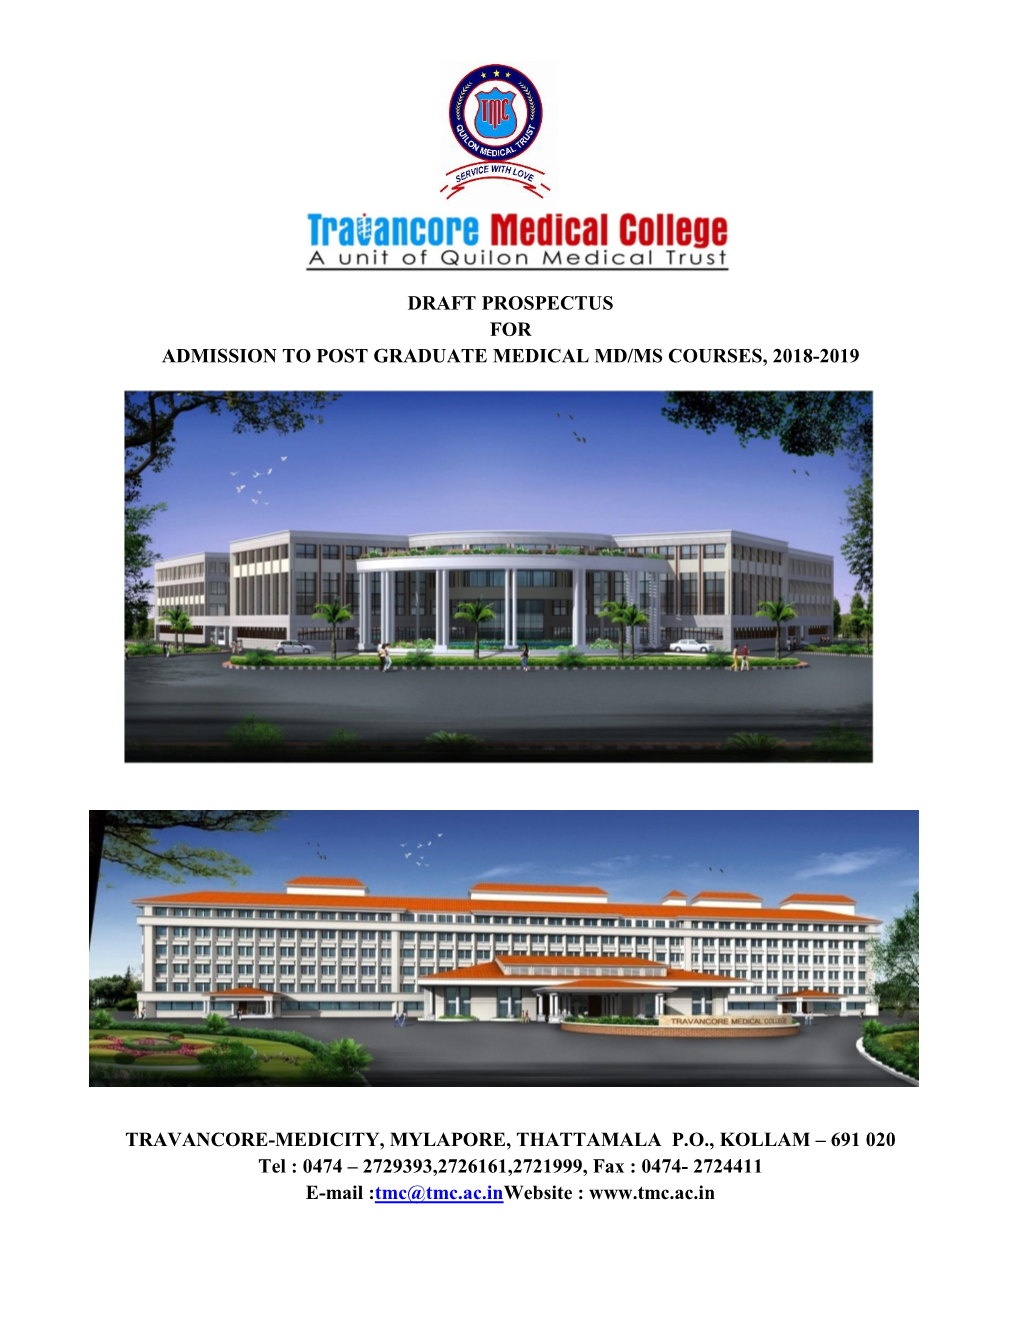 Draft Prospectus for Admission to Post Graduate Medical Md/Ms Courses, 2018-2019 Travancore-Medicity, Mylapore, Thattamala P